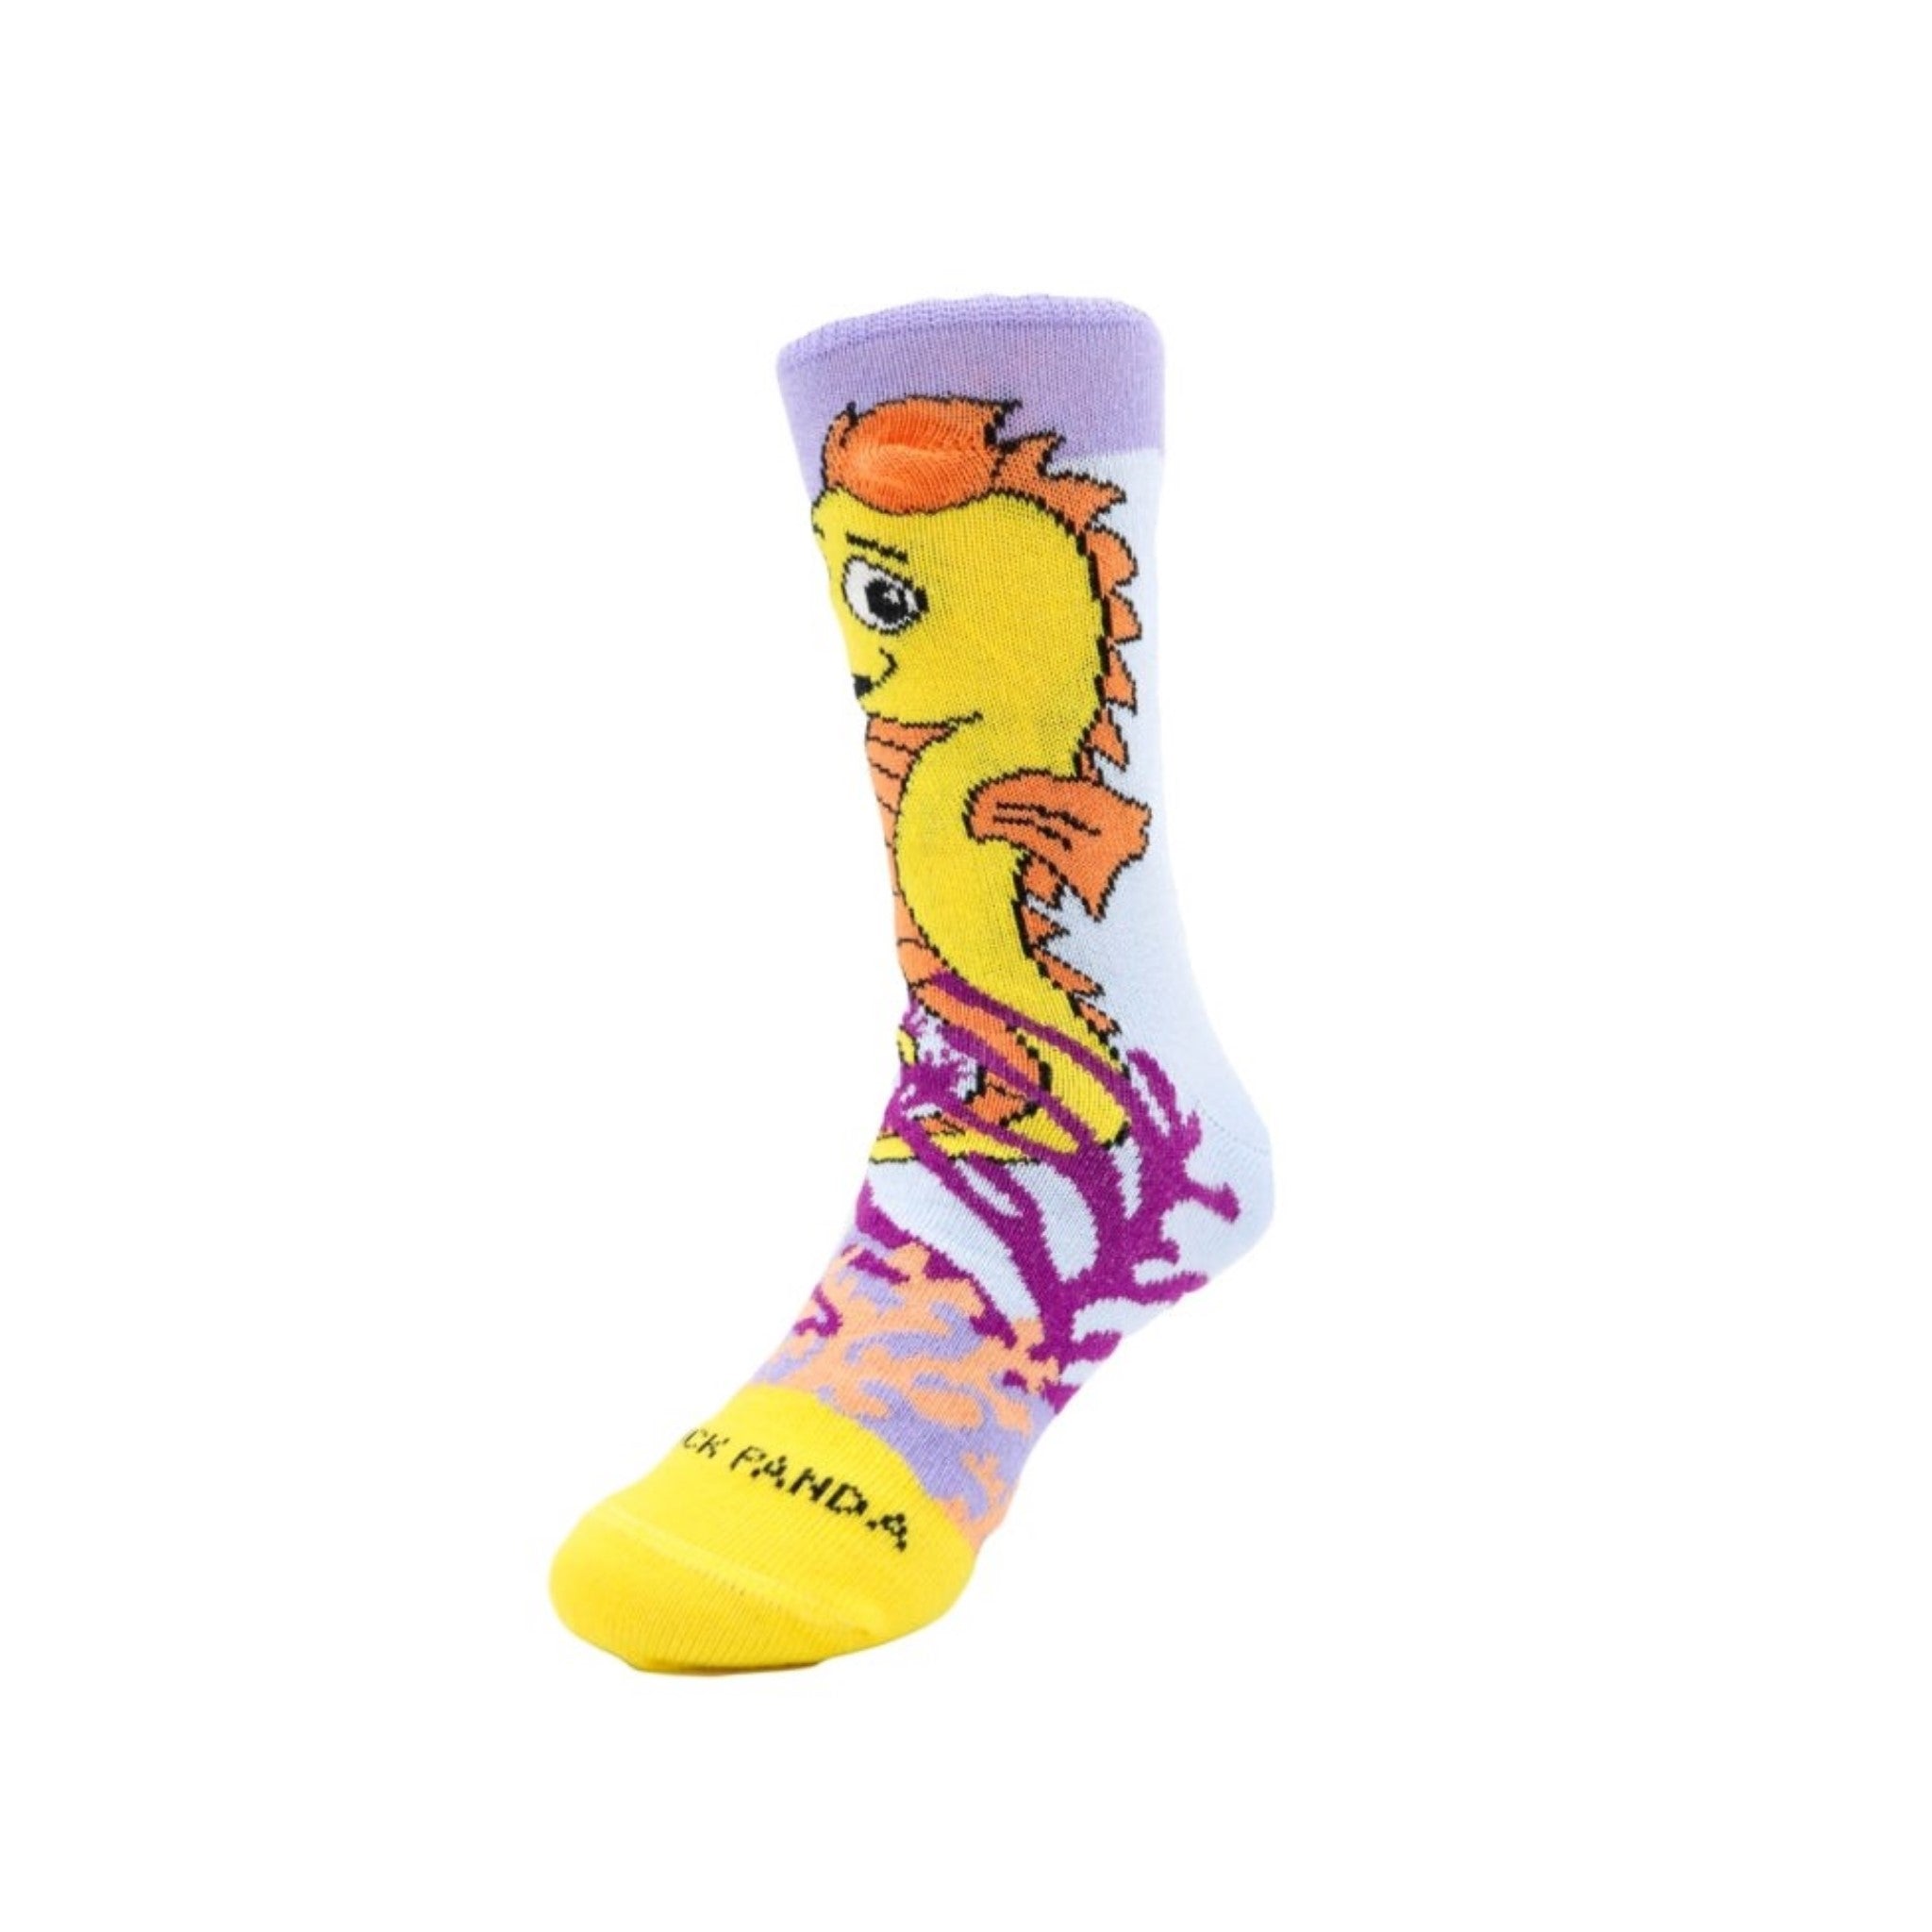 Magical Seahorse Socks (Ages 0-7)